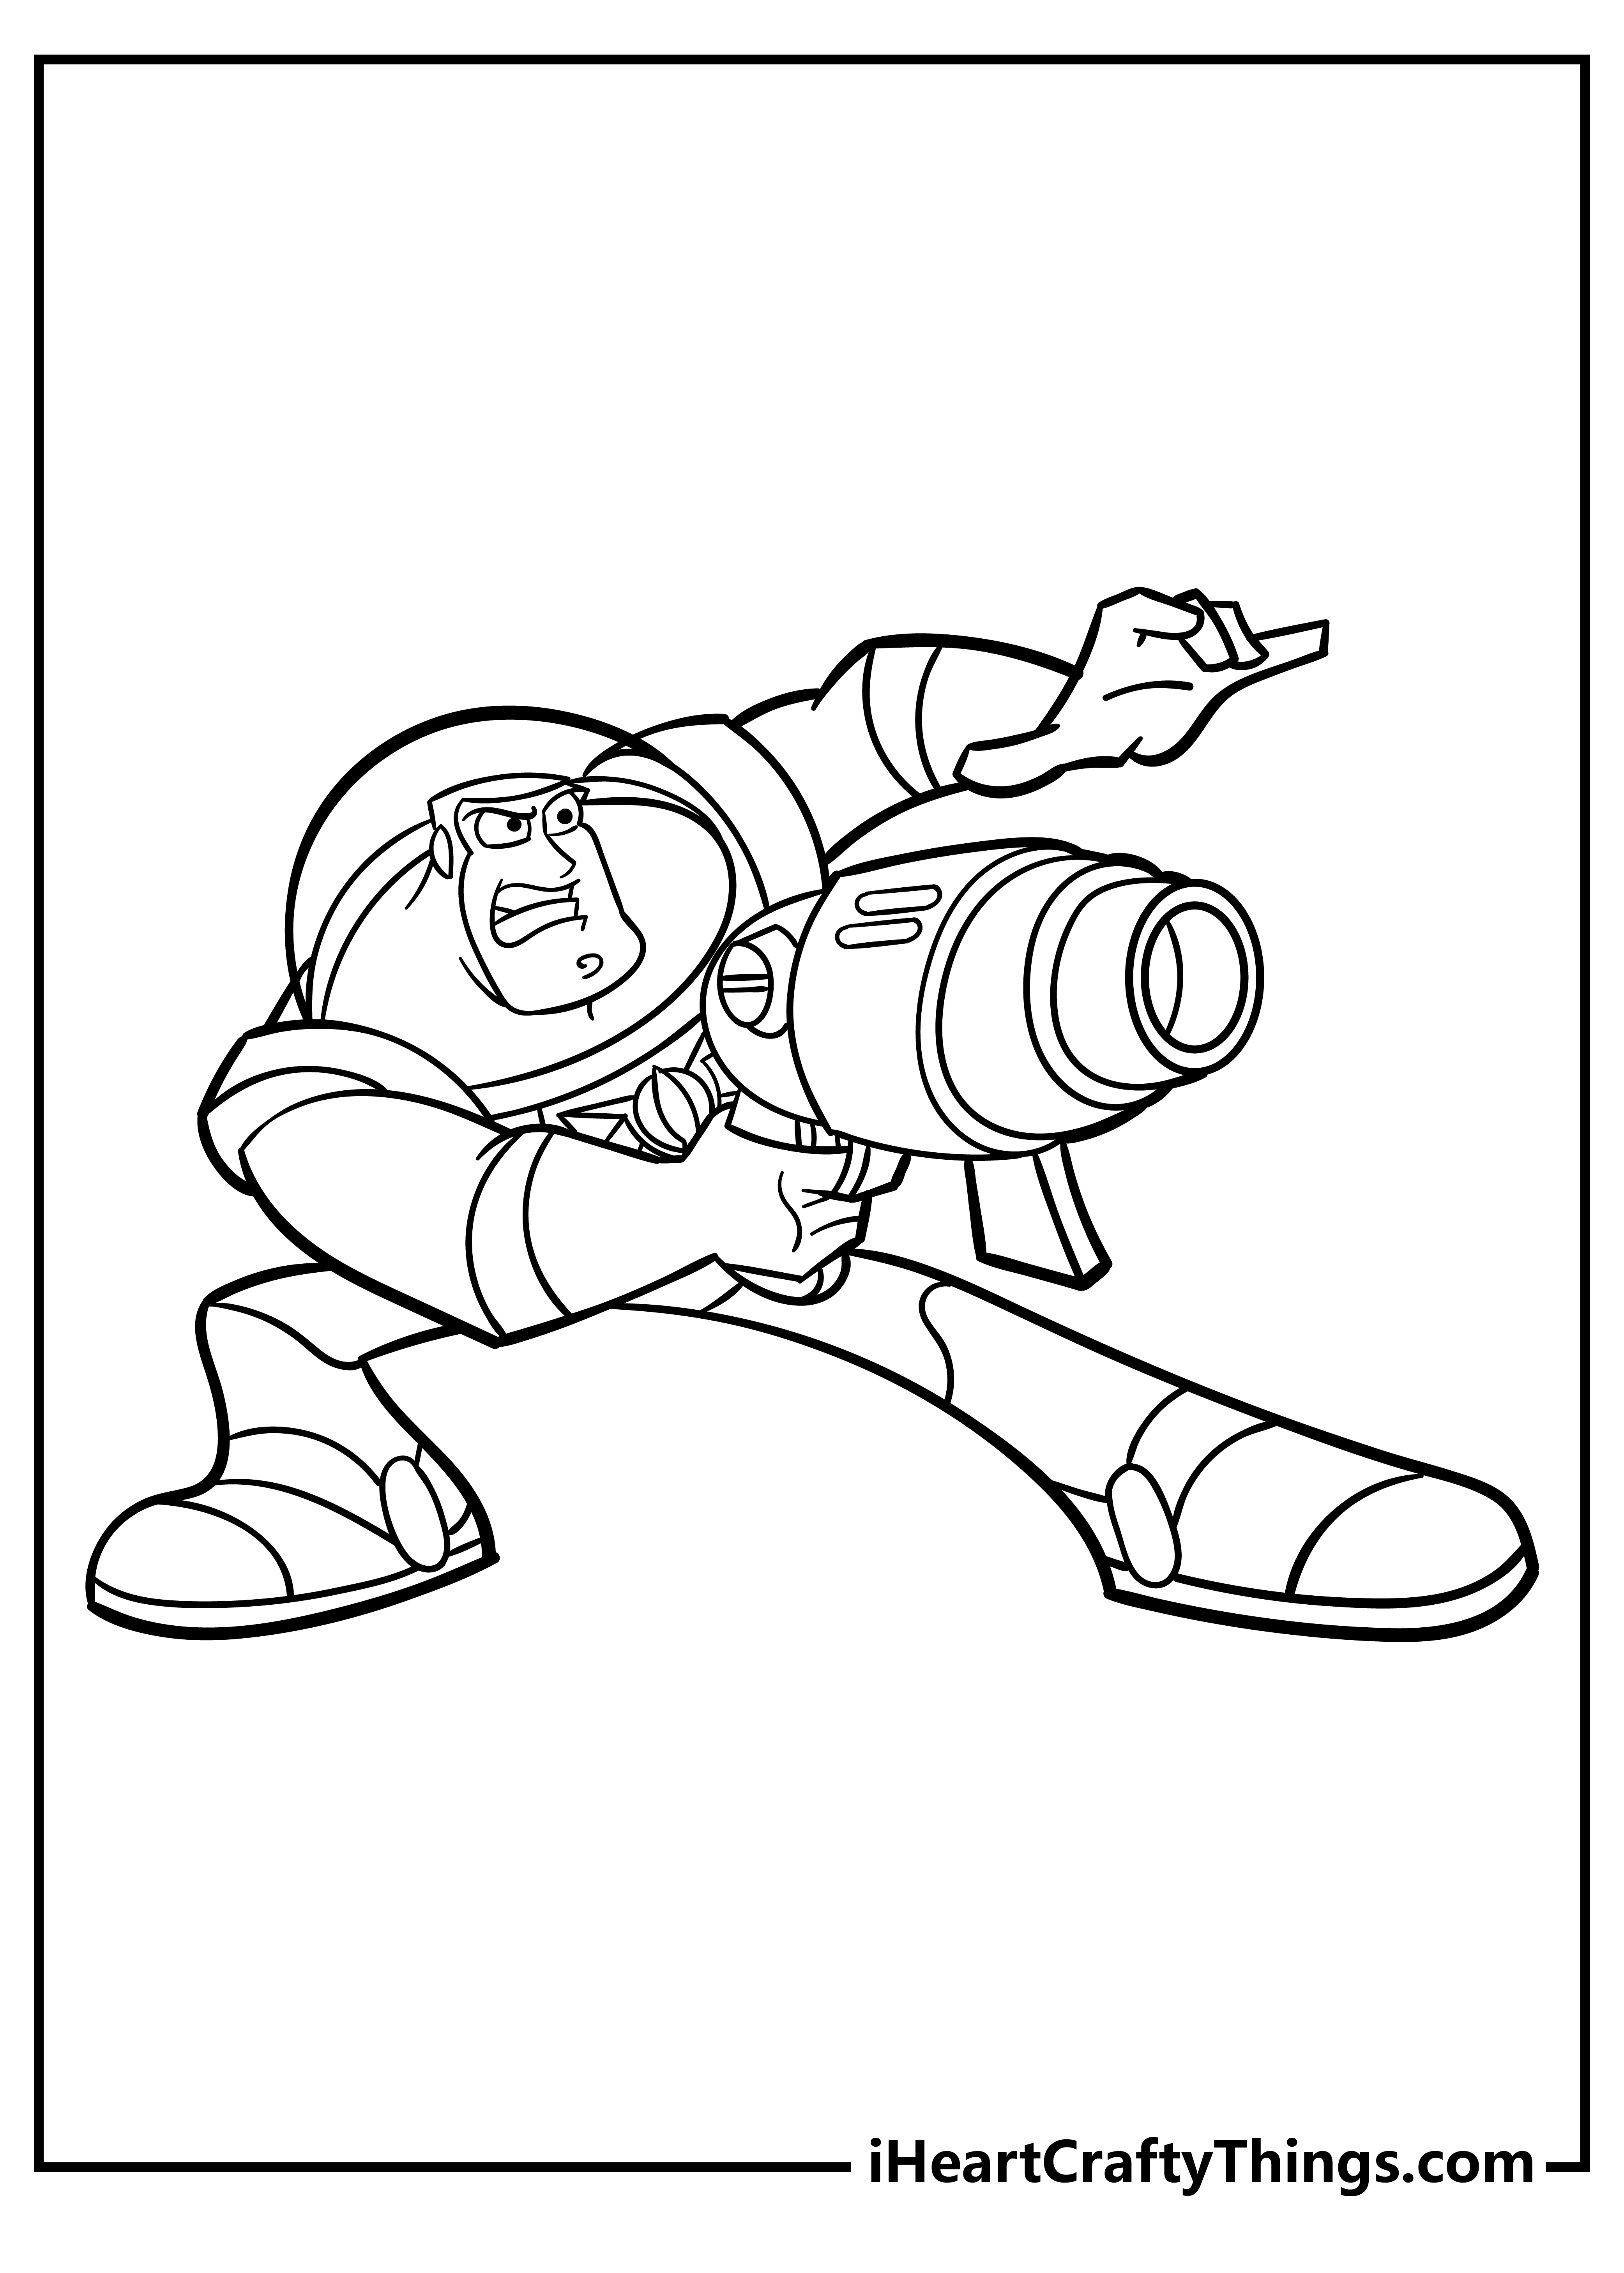 Buzz Lightyear Cartoon Coloring Sheet for children free download